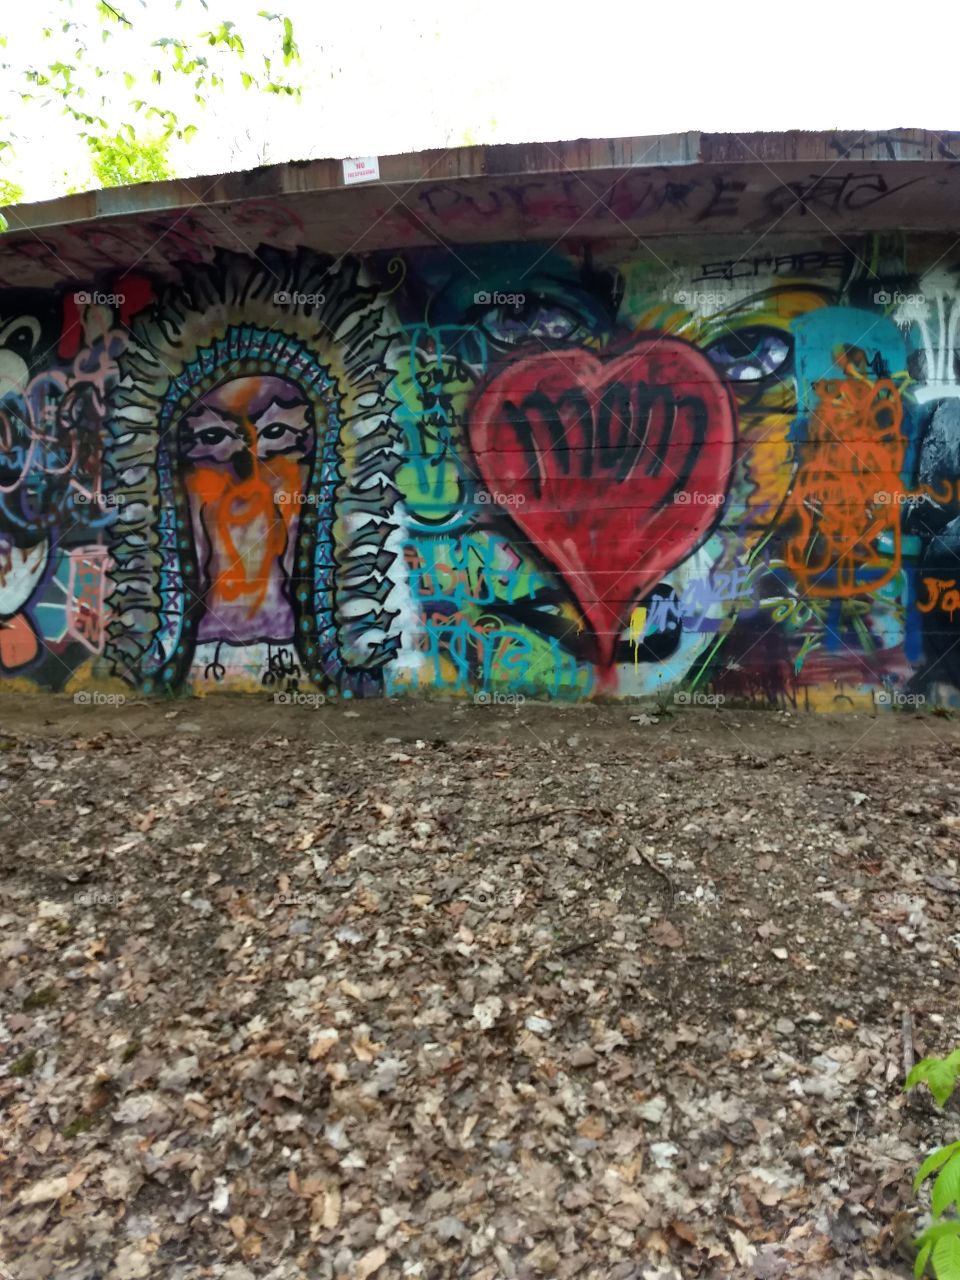 Wall Art on a Trail